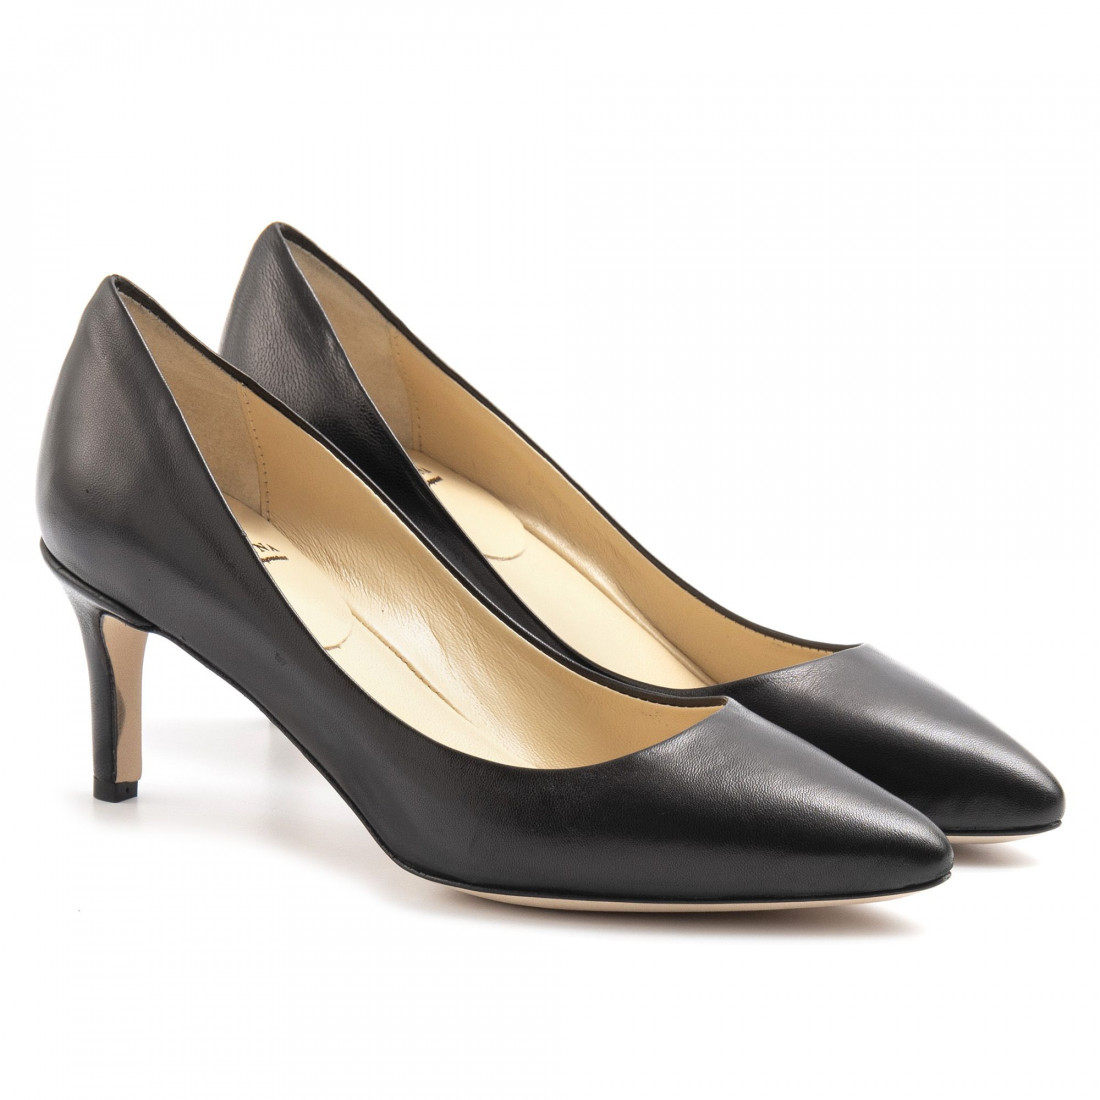 Black leather L'Arianna pump with medium heel